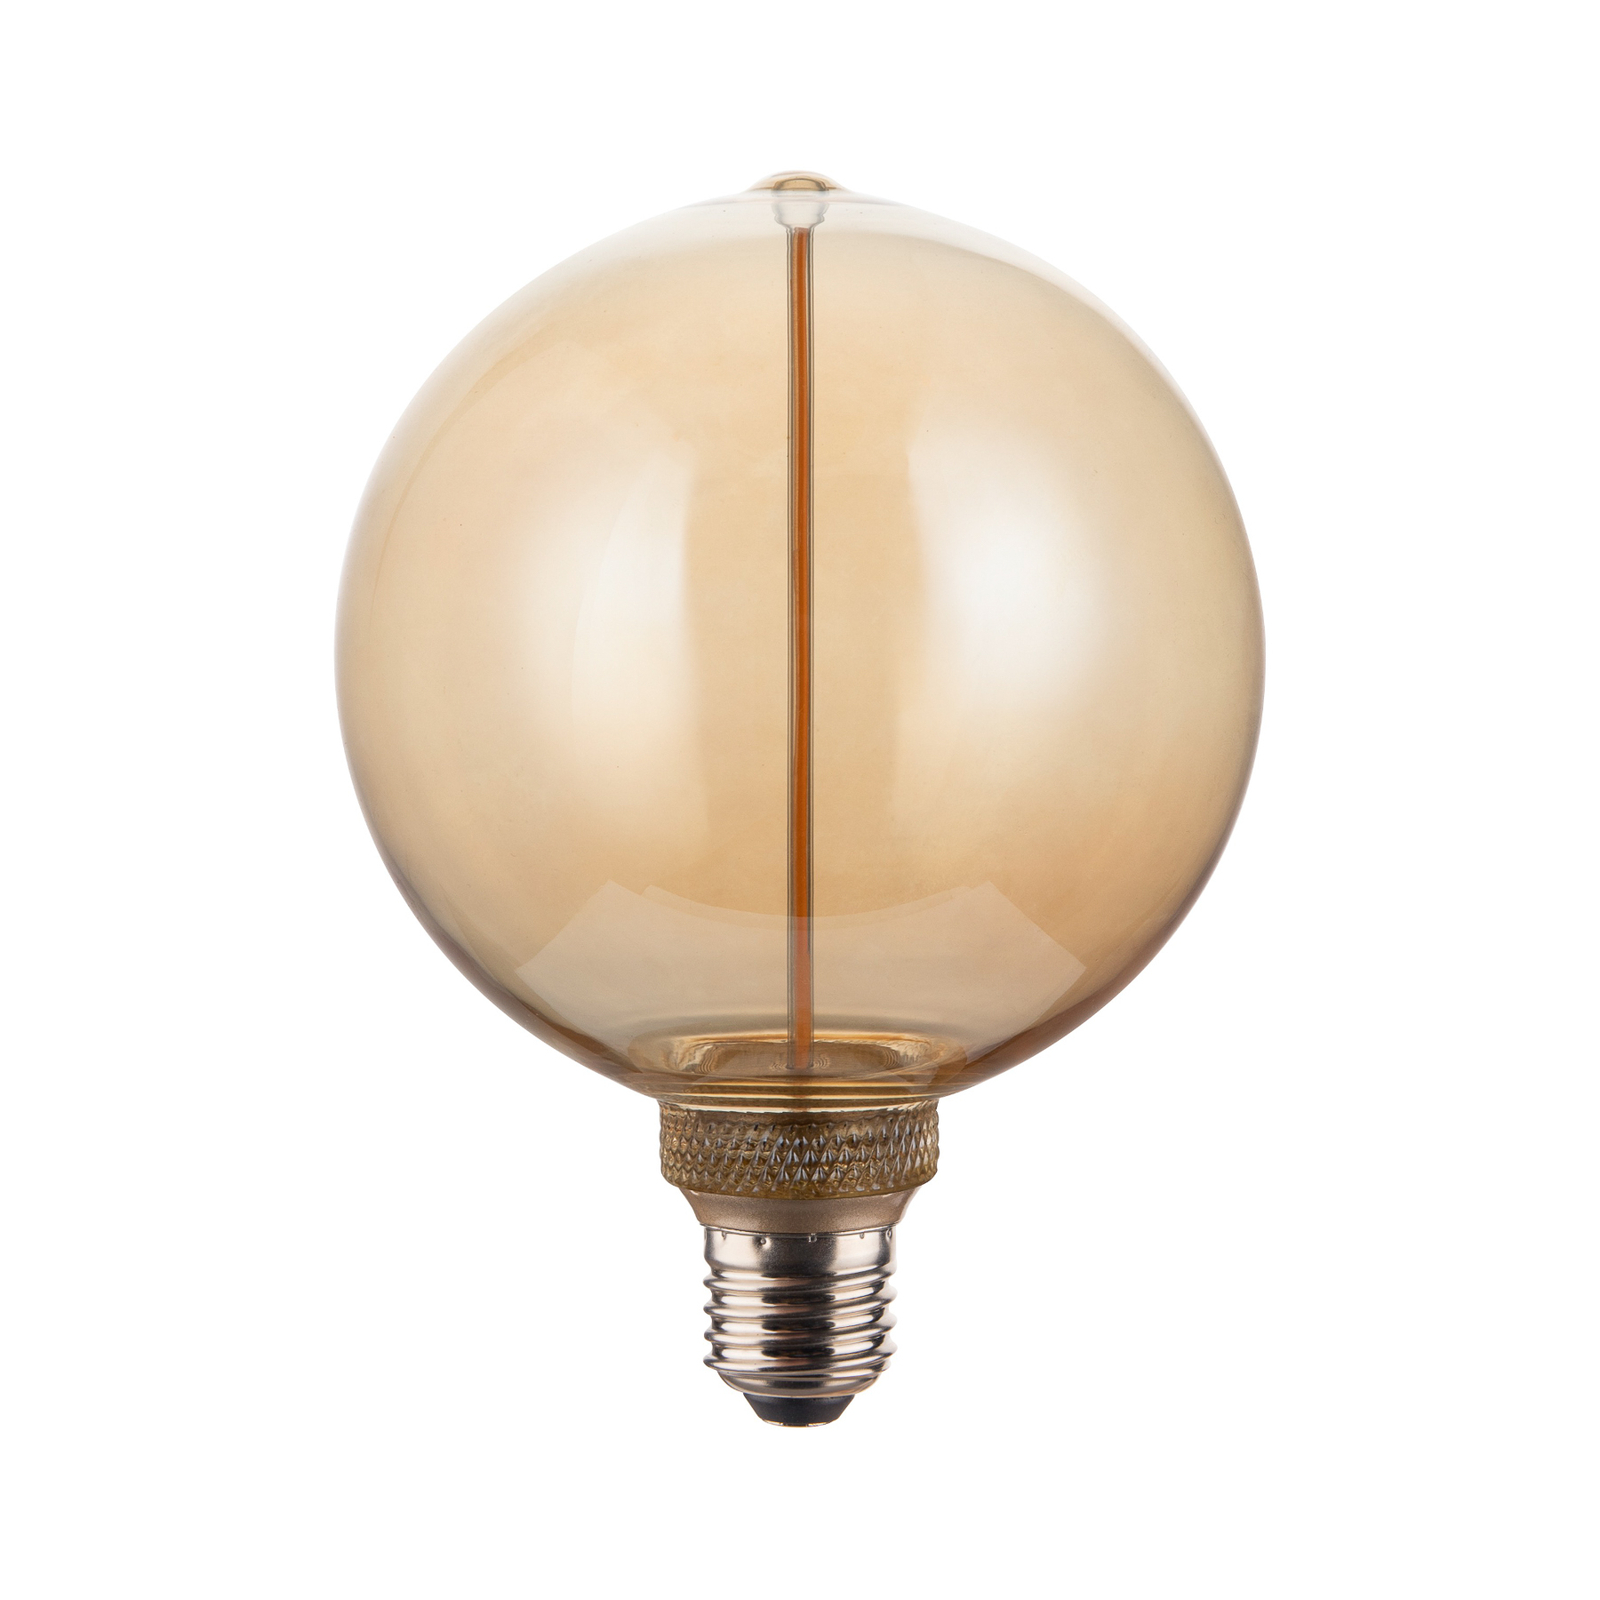 PR Home LED bulb Edge E27 gold 2W 1800K dimmable G125